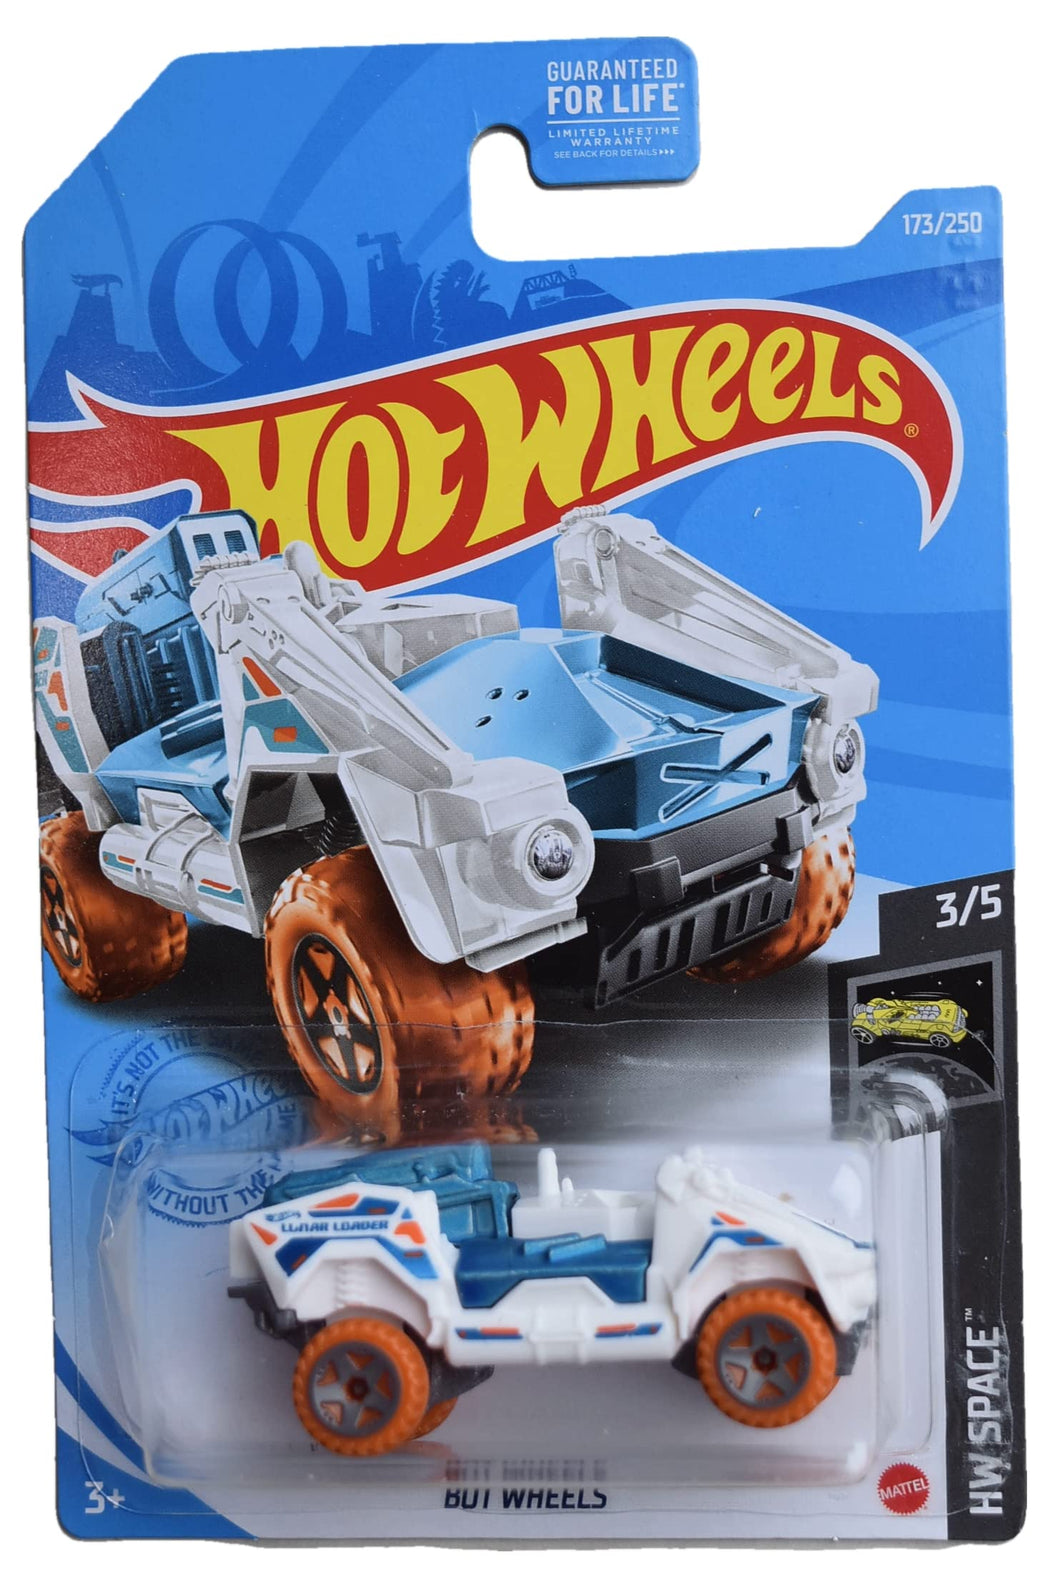 Hot Wheels Bot Wheels, Hw Space 3/5 White 173/250